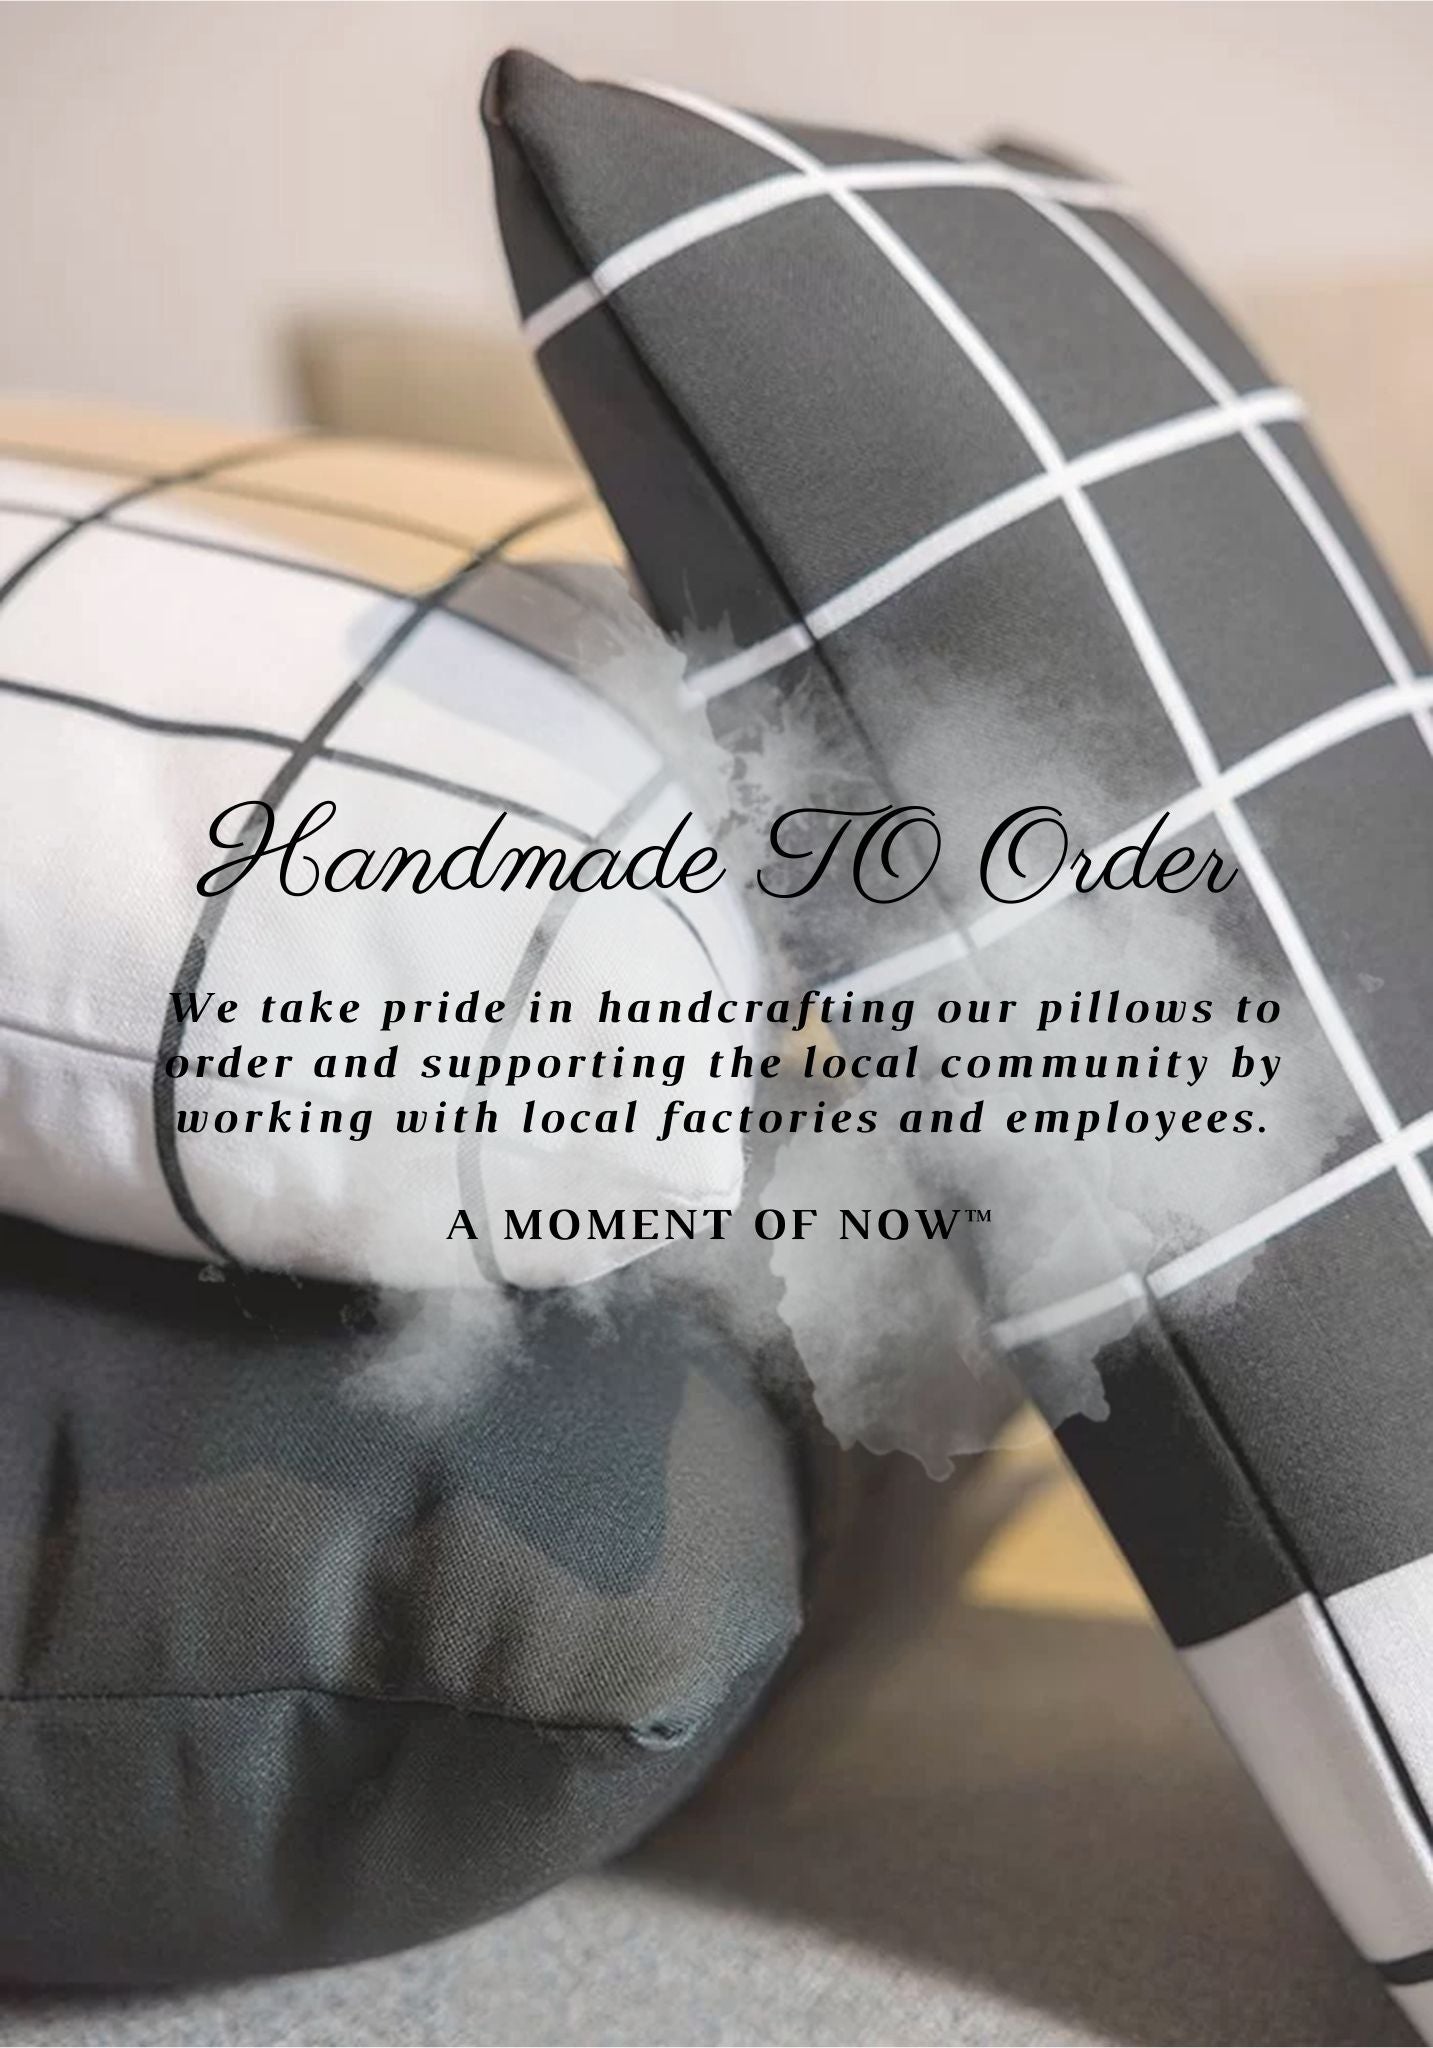 Shop Be Fearless Minimalist Premium Decorative Throw Accent Pillow Cushion, Pillow, USA Boutique